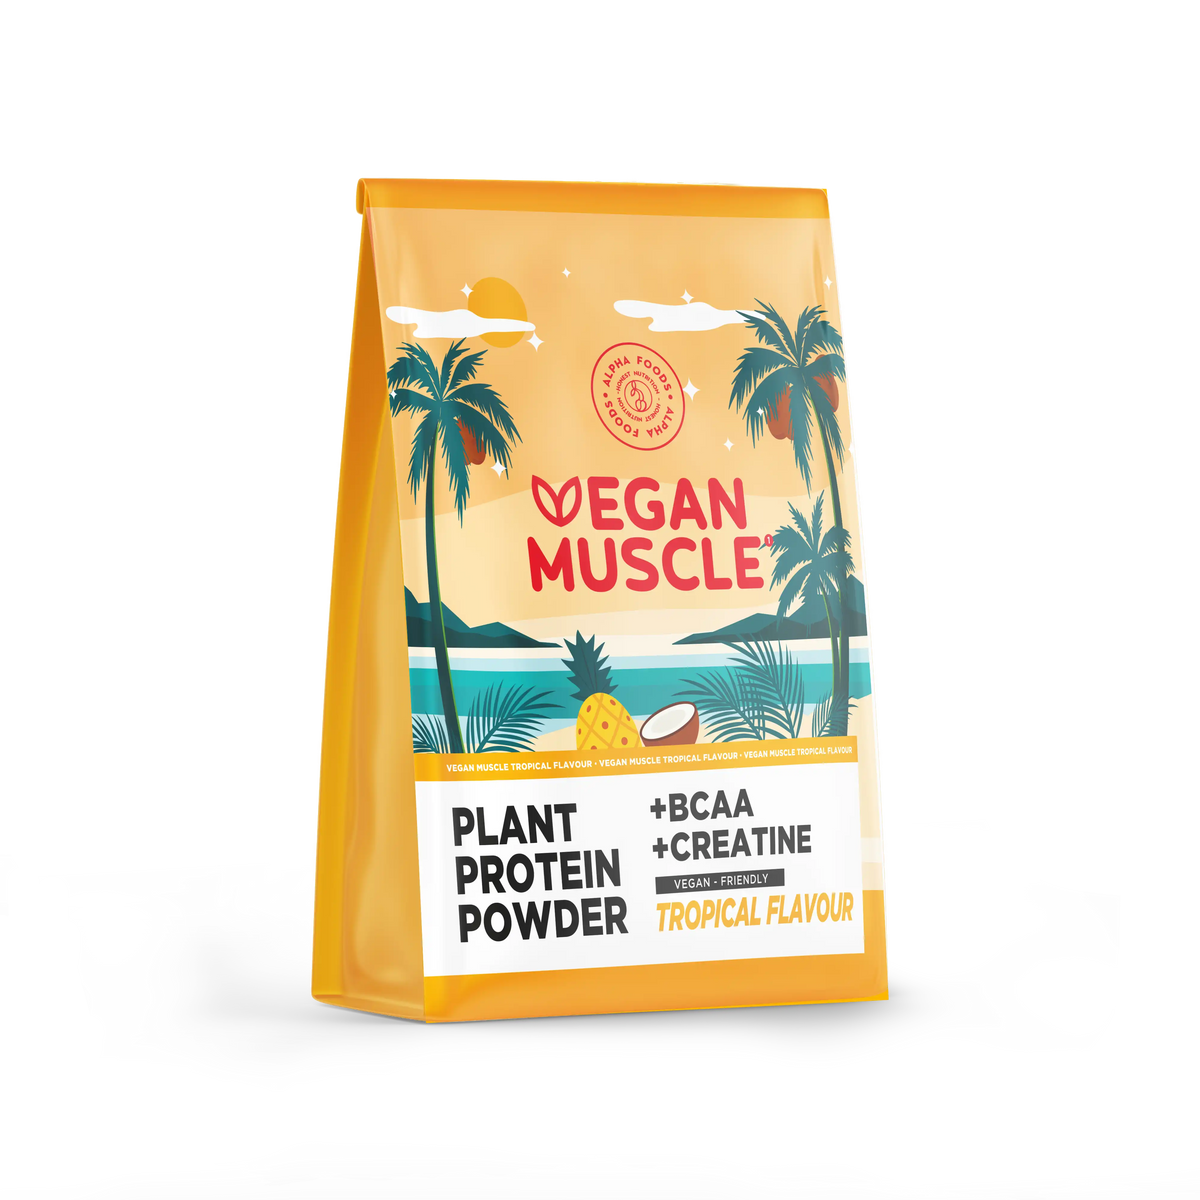 Vegan Muscle - Creatine & BCAA Proteine - Tropical